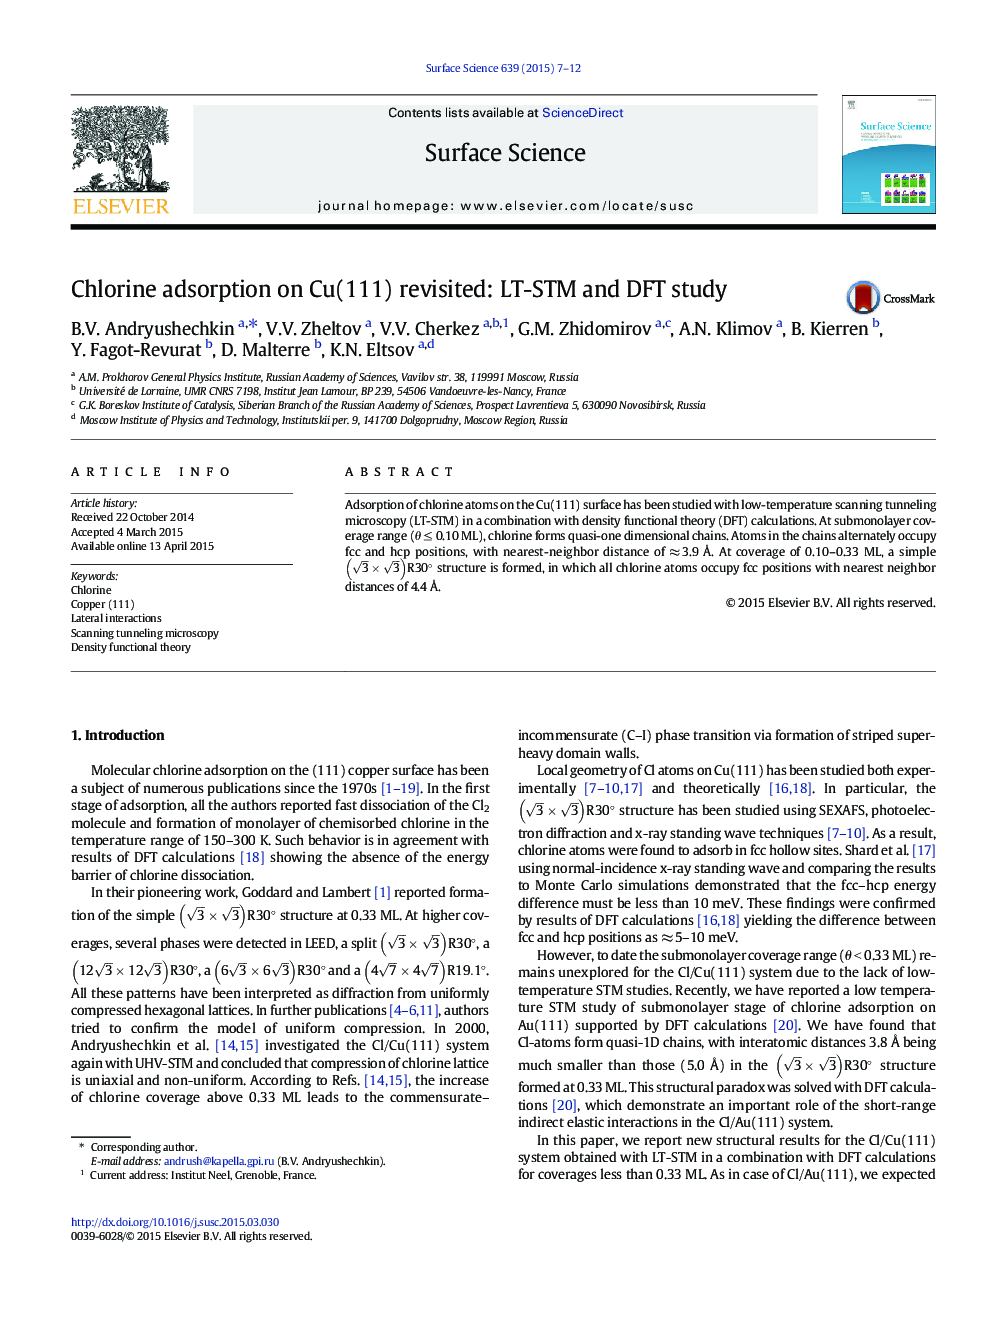 Chlorine adsorption on Cu(111) revisited: LT-STM and DFT study